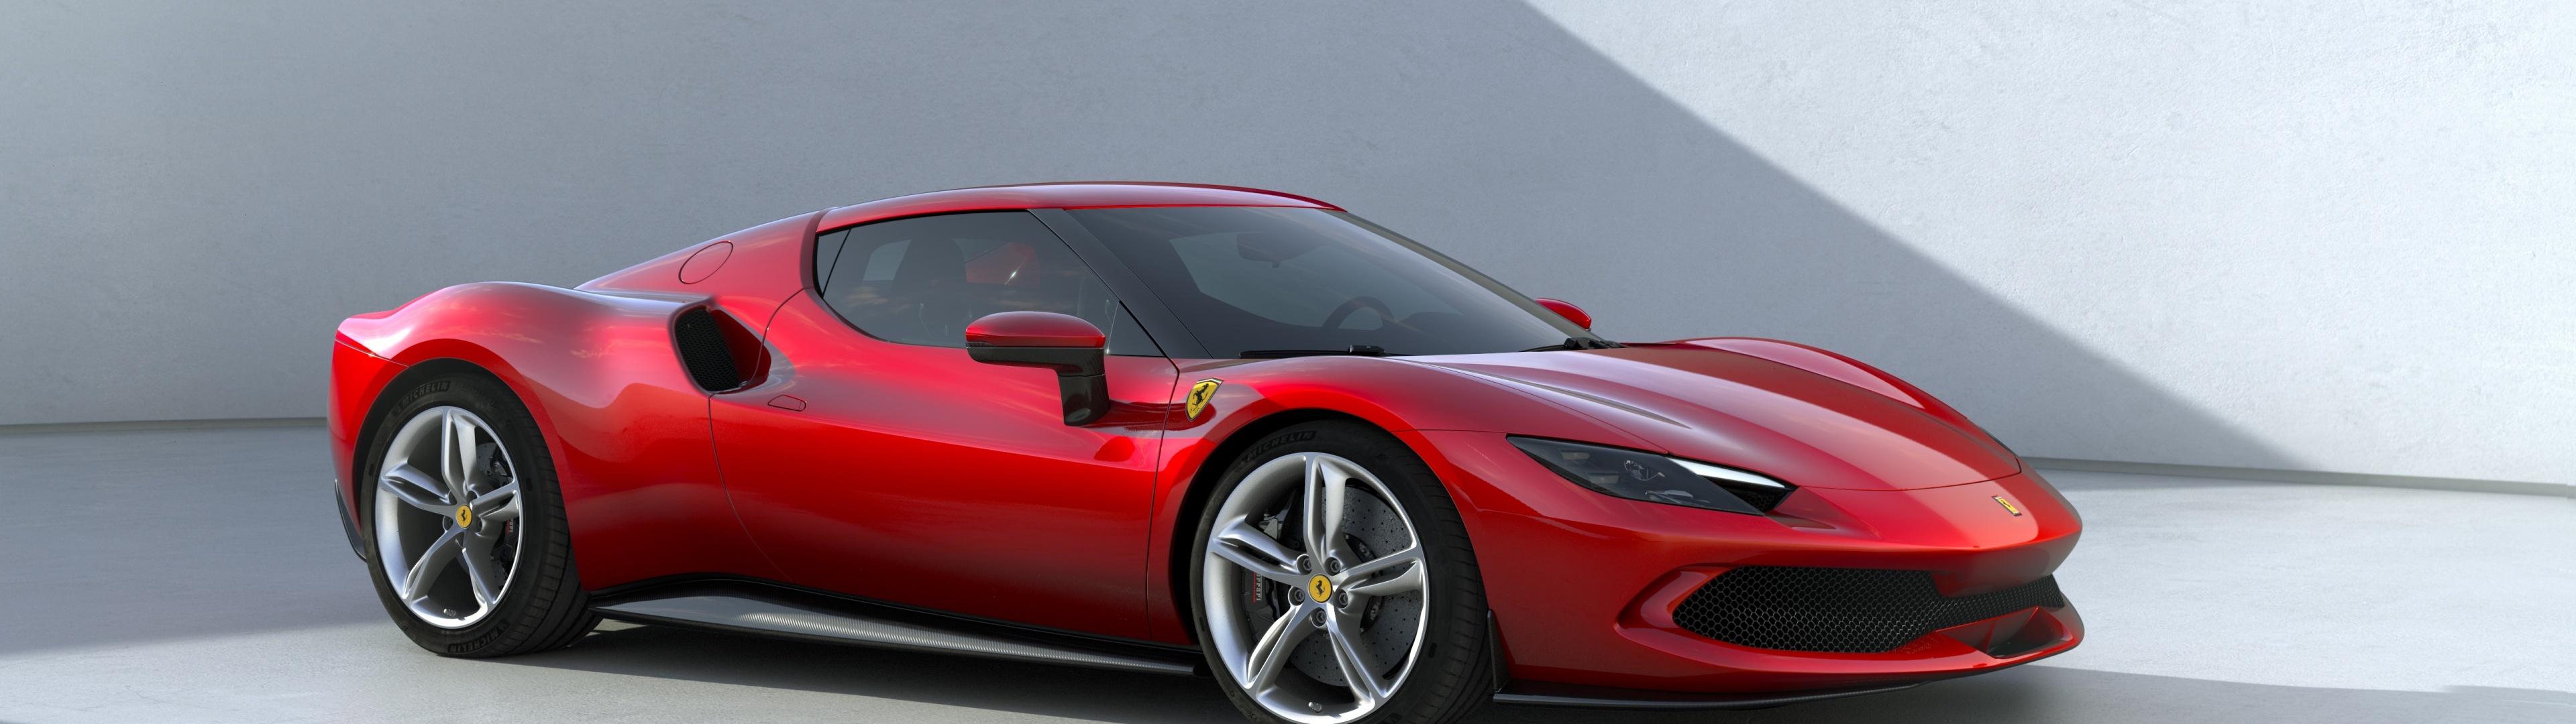 Ferrari 296 GTB, 4K wallpaper, Hybrid sports car, Red beauty, 3840x1080 Dual Screen Desktop